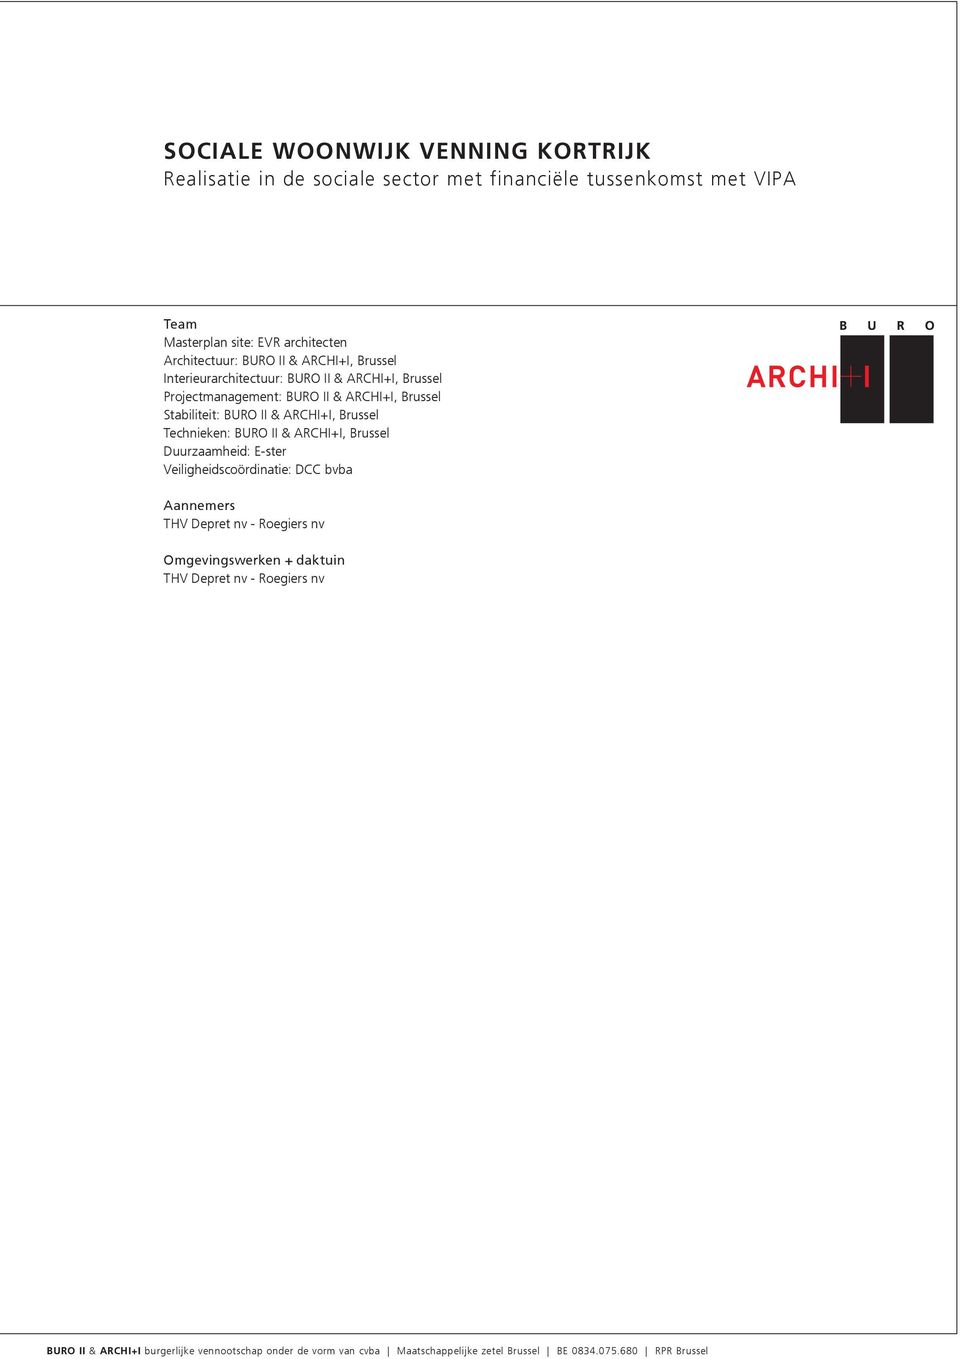 BURO II & ARCHI+I, Brussel Stabiliteit: BURO II & ARCHI+I, Brussel Technieken: BURO II & ARCHI+I, Brussel Duurzaamheid: